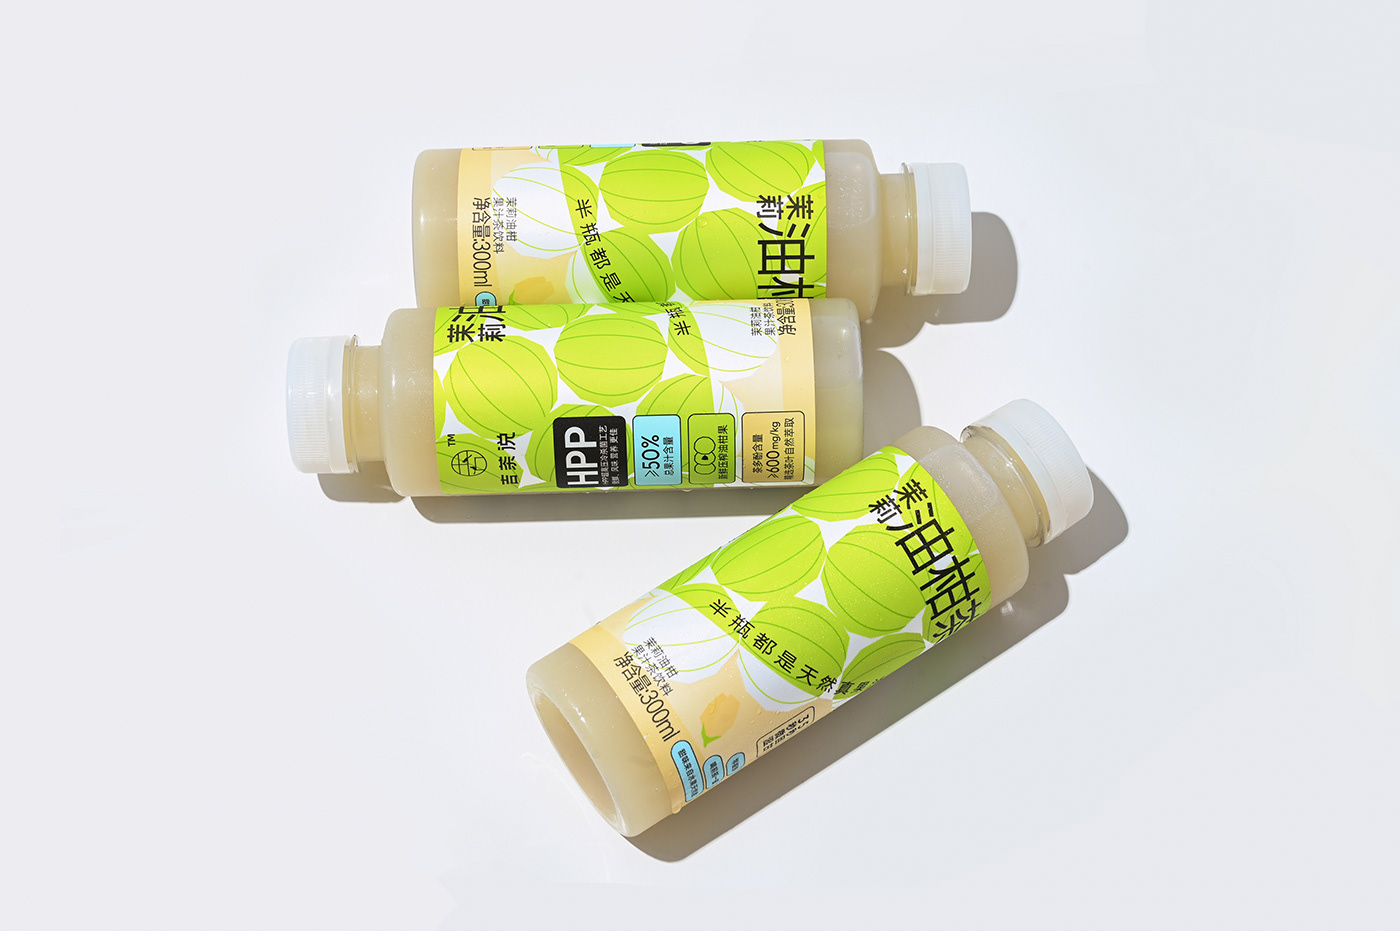 beverage bottle drink juice Label package Packaging packaging design product tea